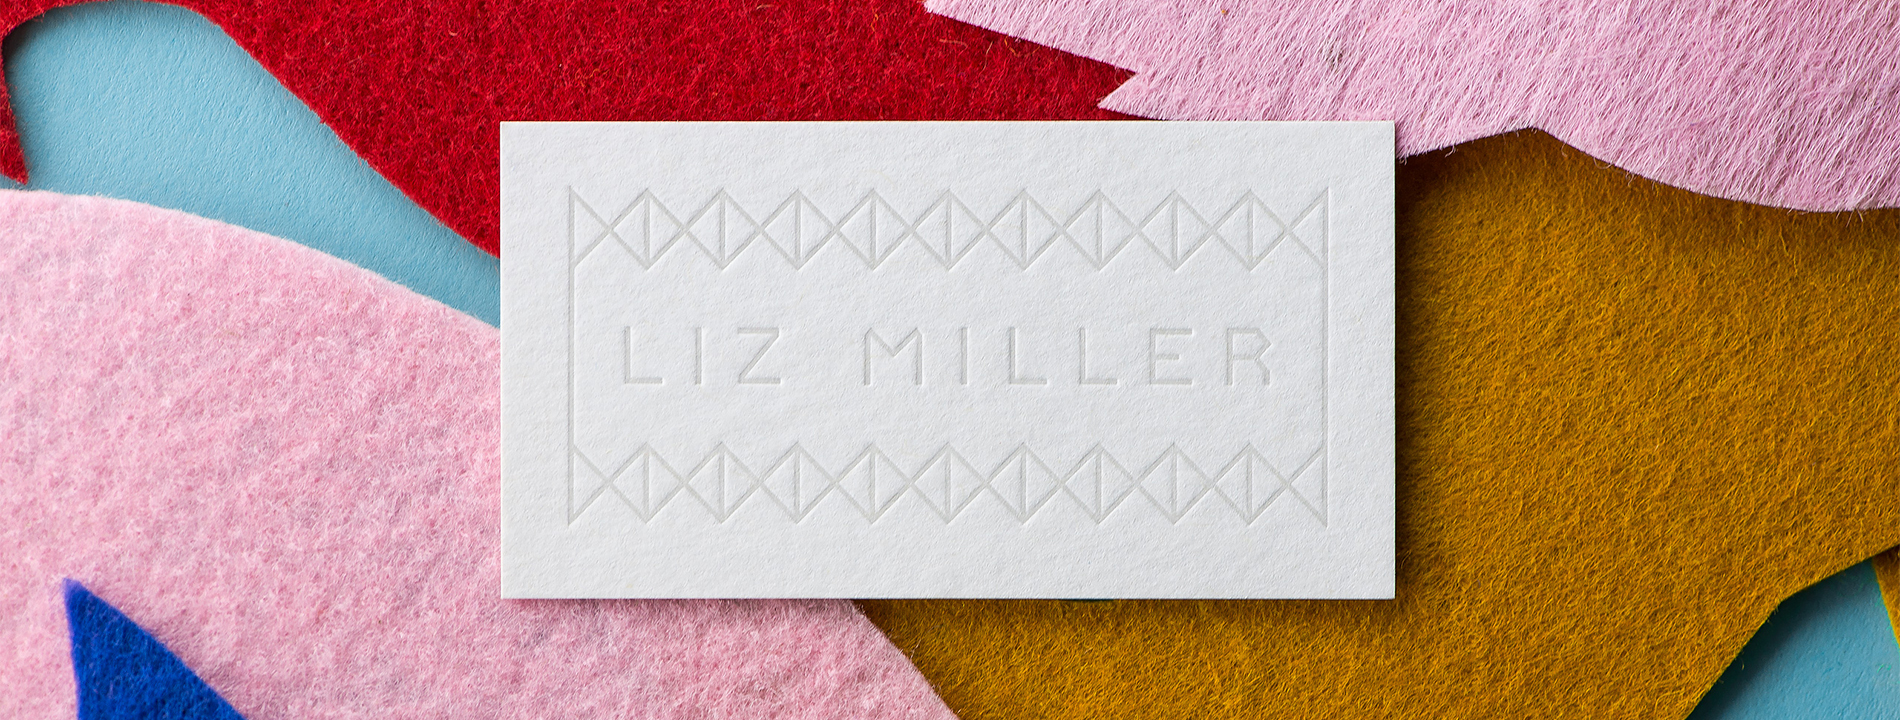 Close-up of Liz Miller business card 